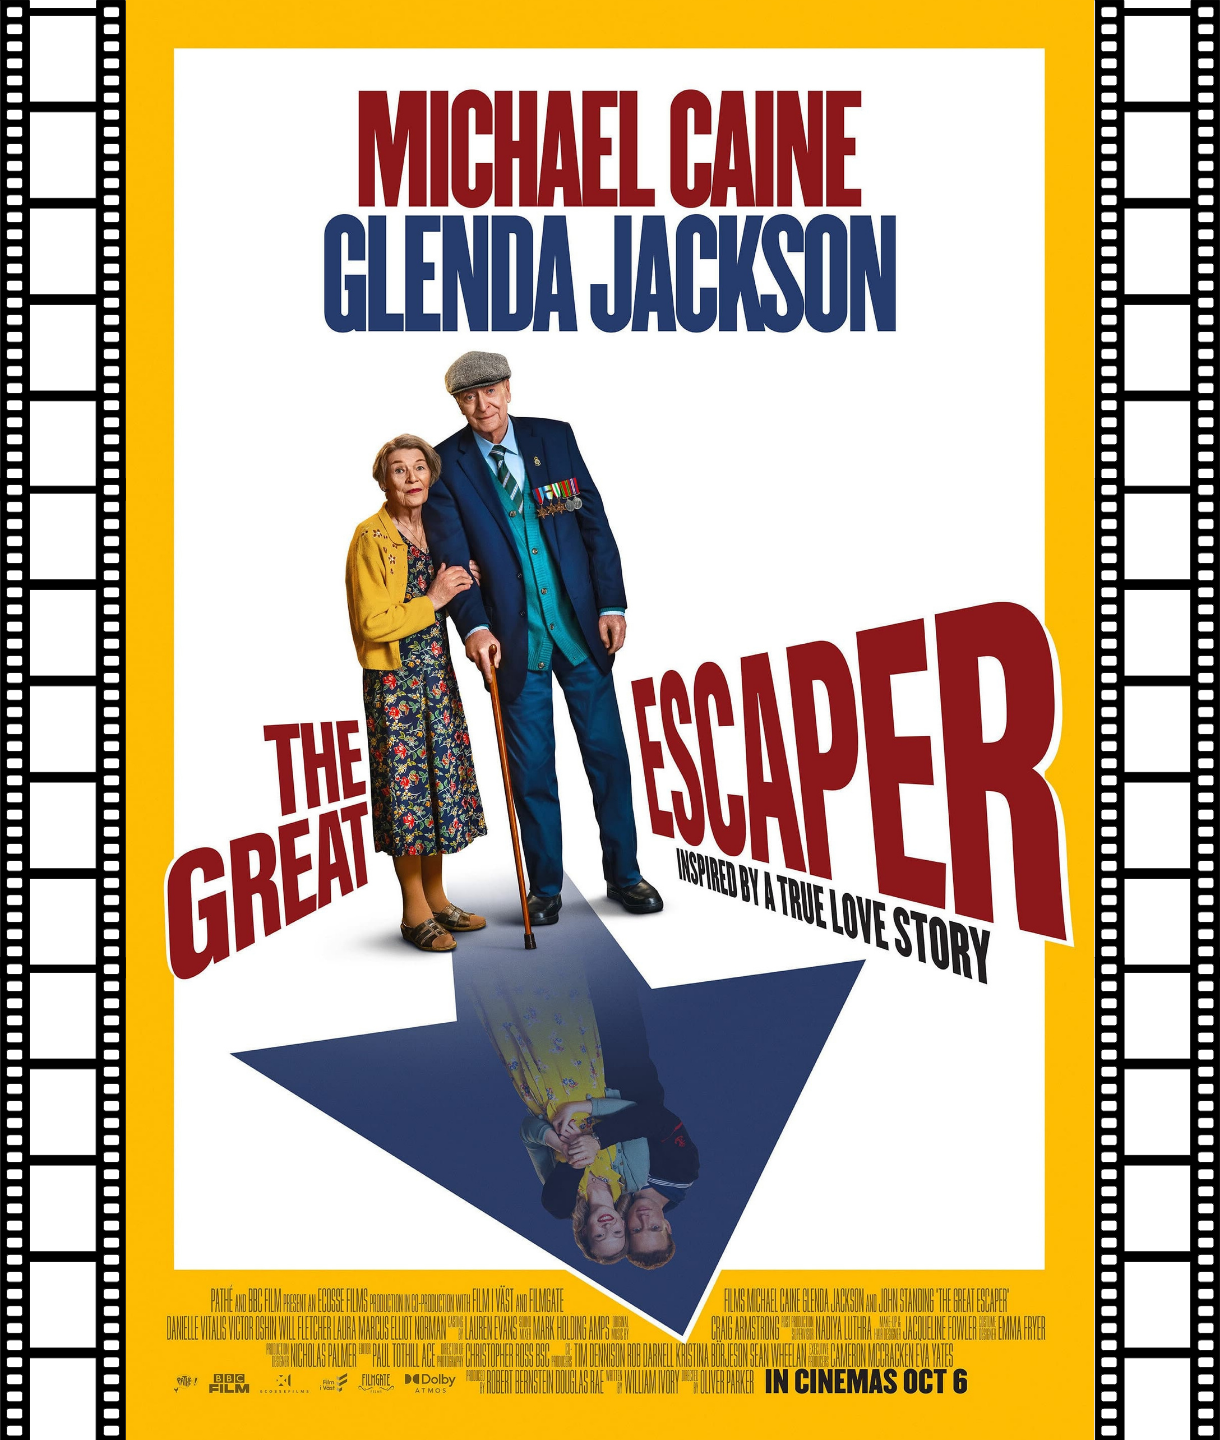 The Great Escaper (12A) Poster Image